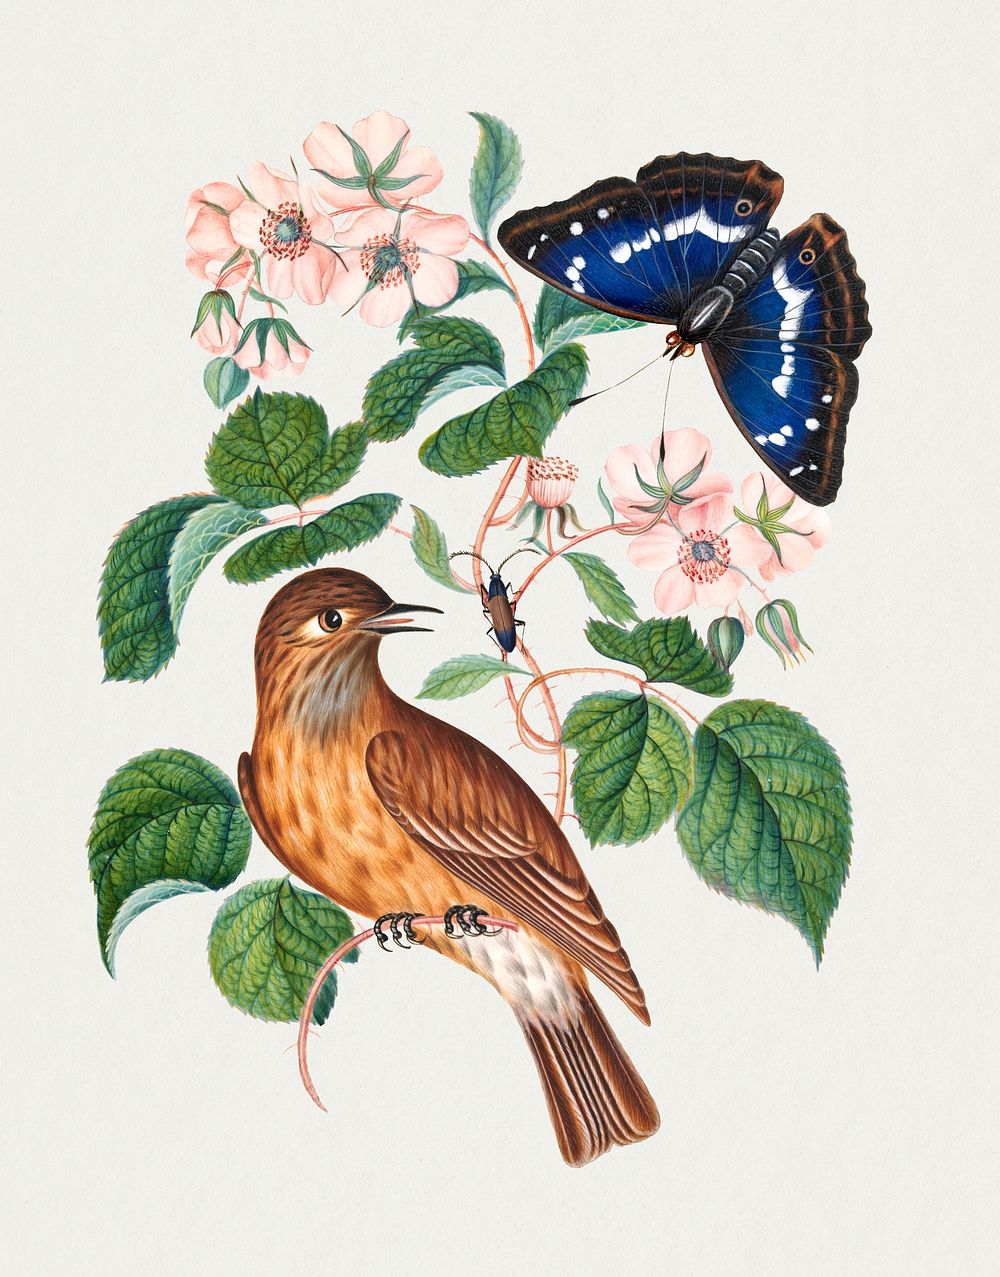 Bird, butterfly, botanical flower sticker psd, remixed from artworks by James Bolton